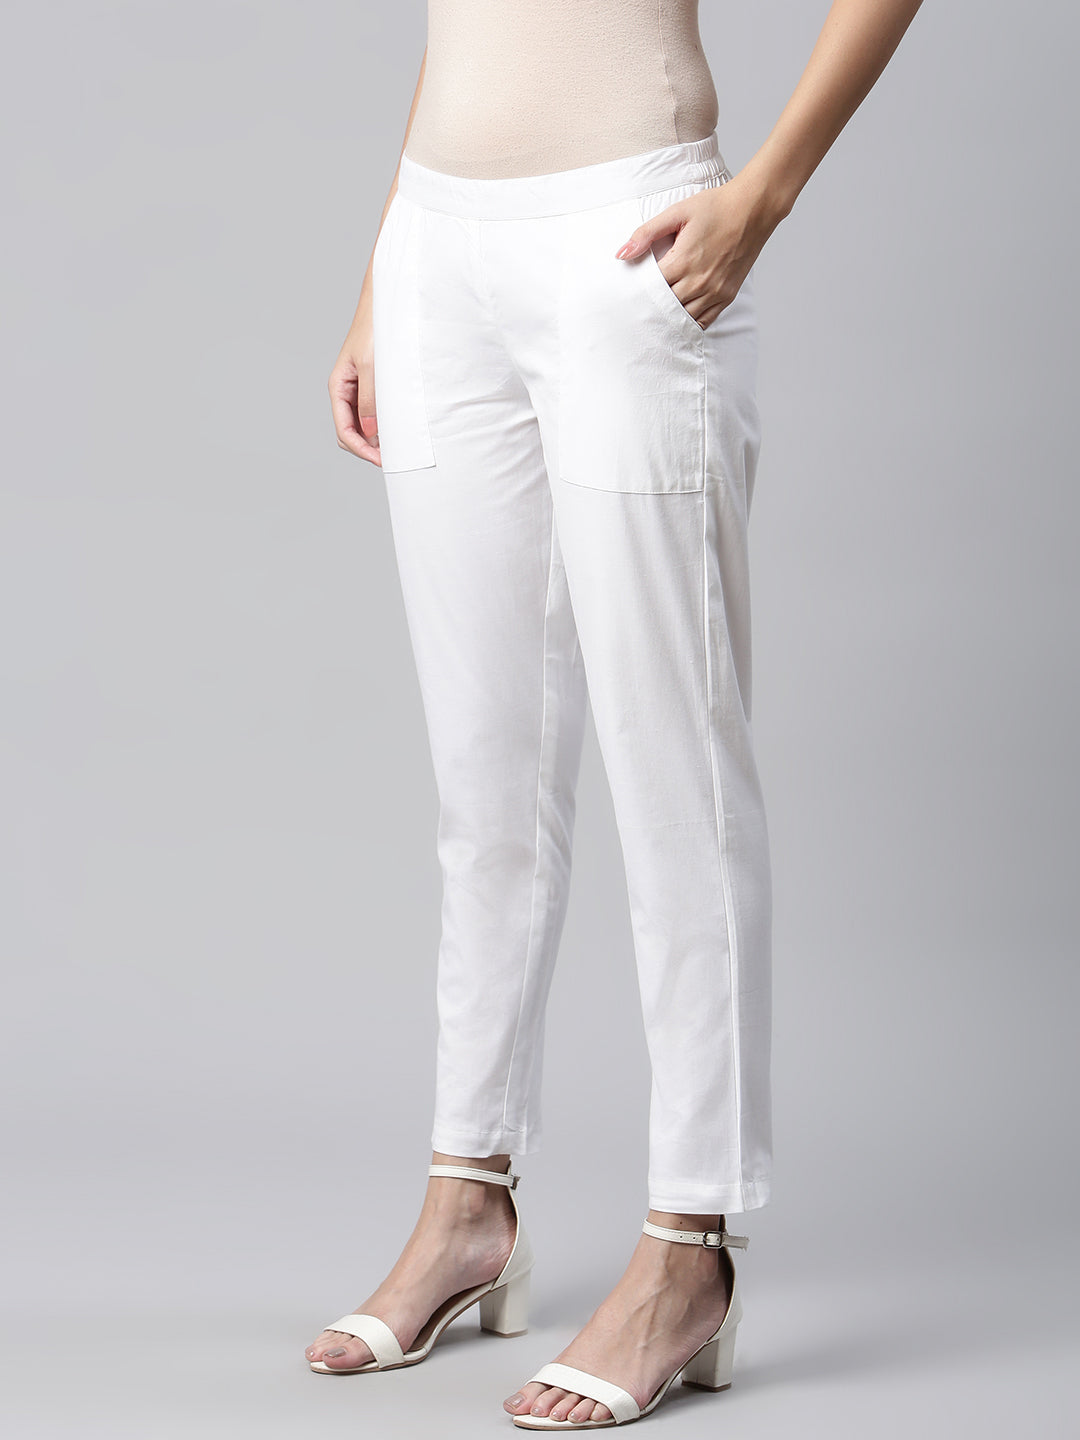 HIGHWAIST WHITE PANTS FOR WOMEN (SIZES 25-36) | Lazada PH